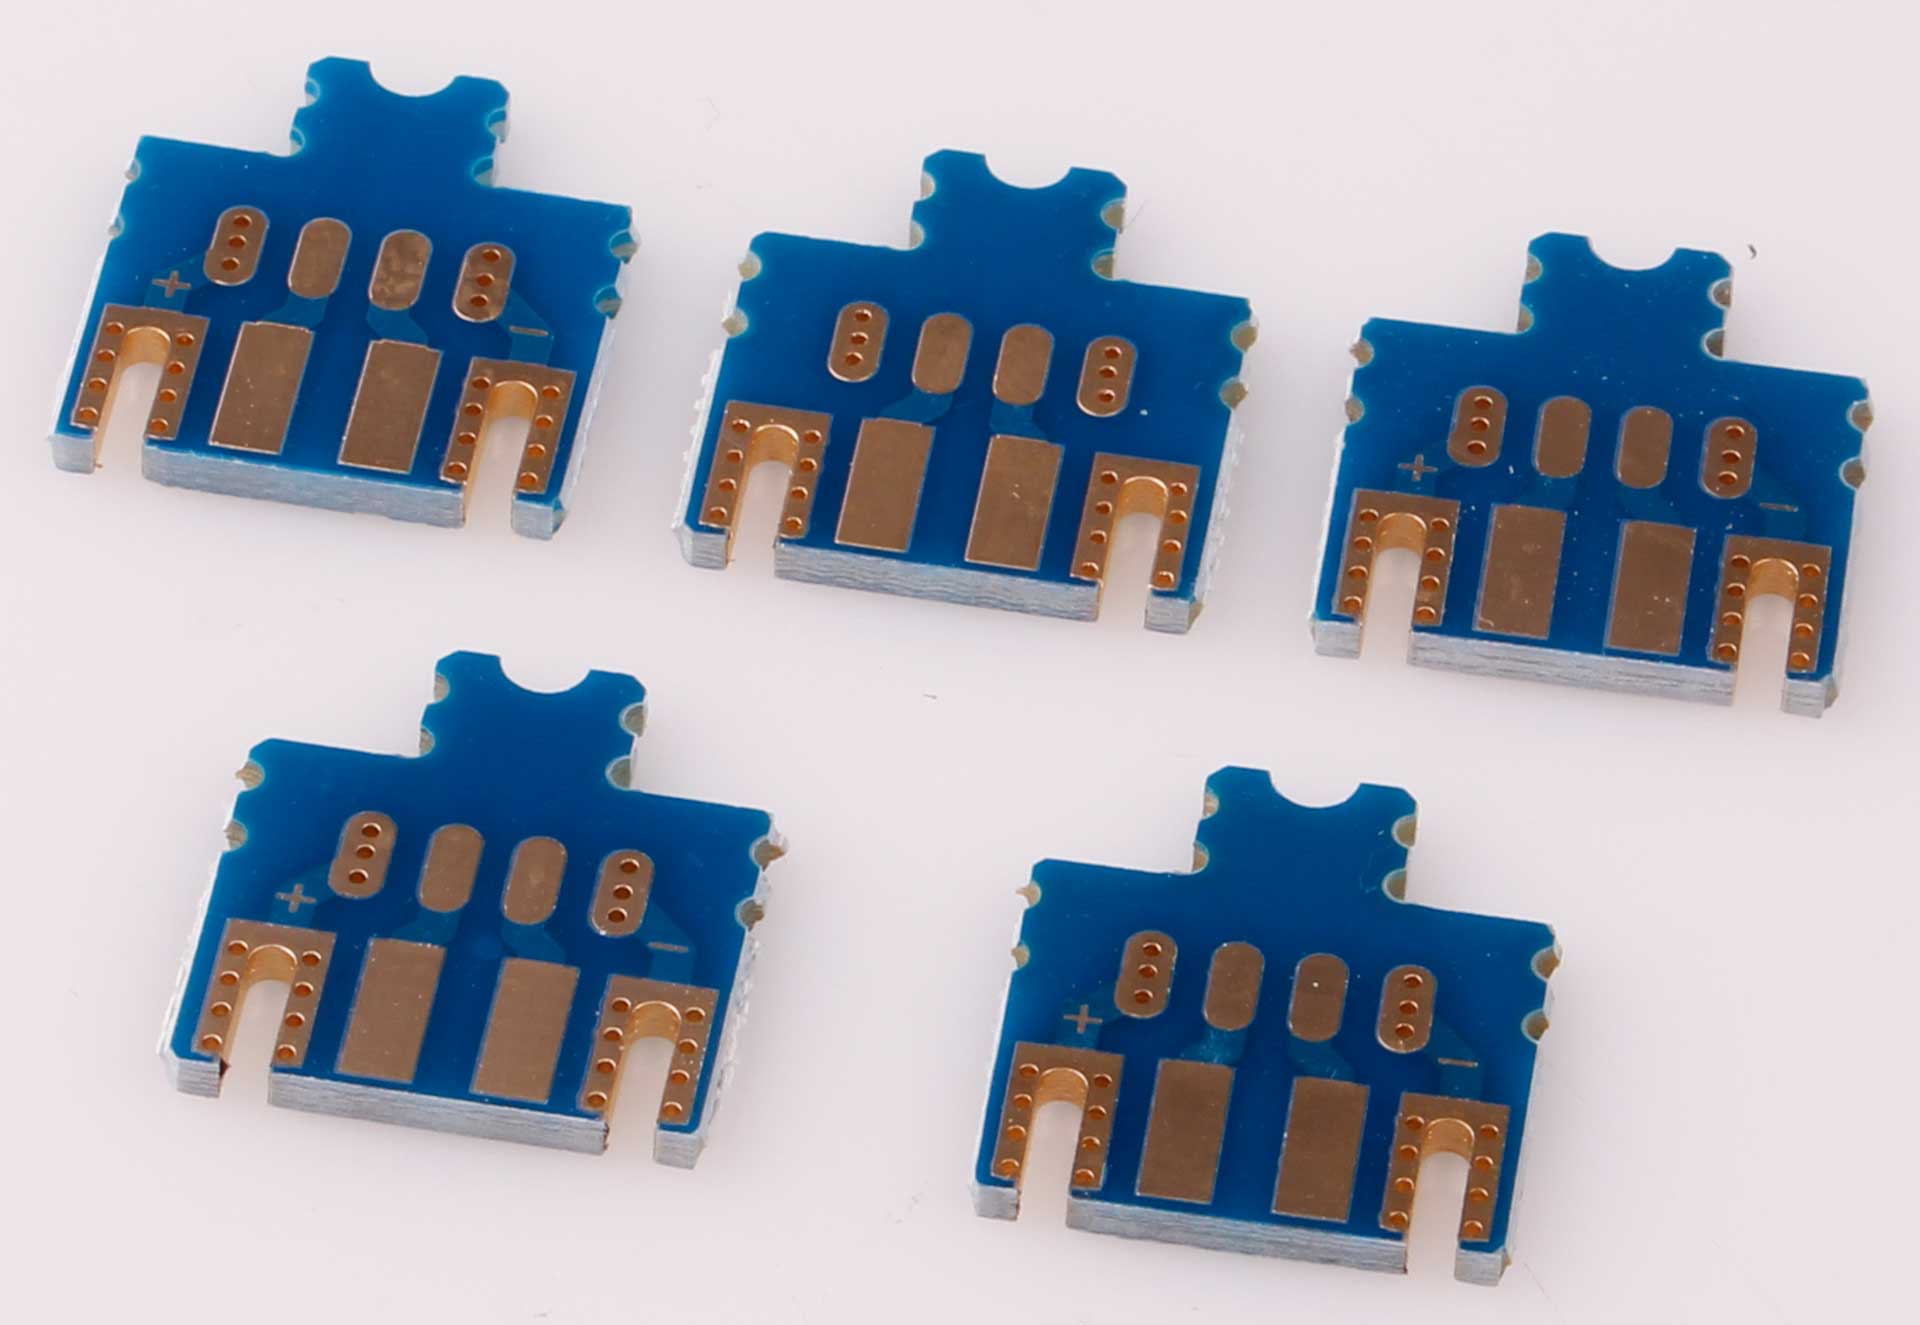 Robbe Modellsport solder board 6-pin MPX "Hochstrom" connector system 5 pcs